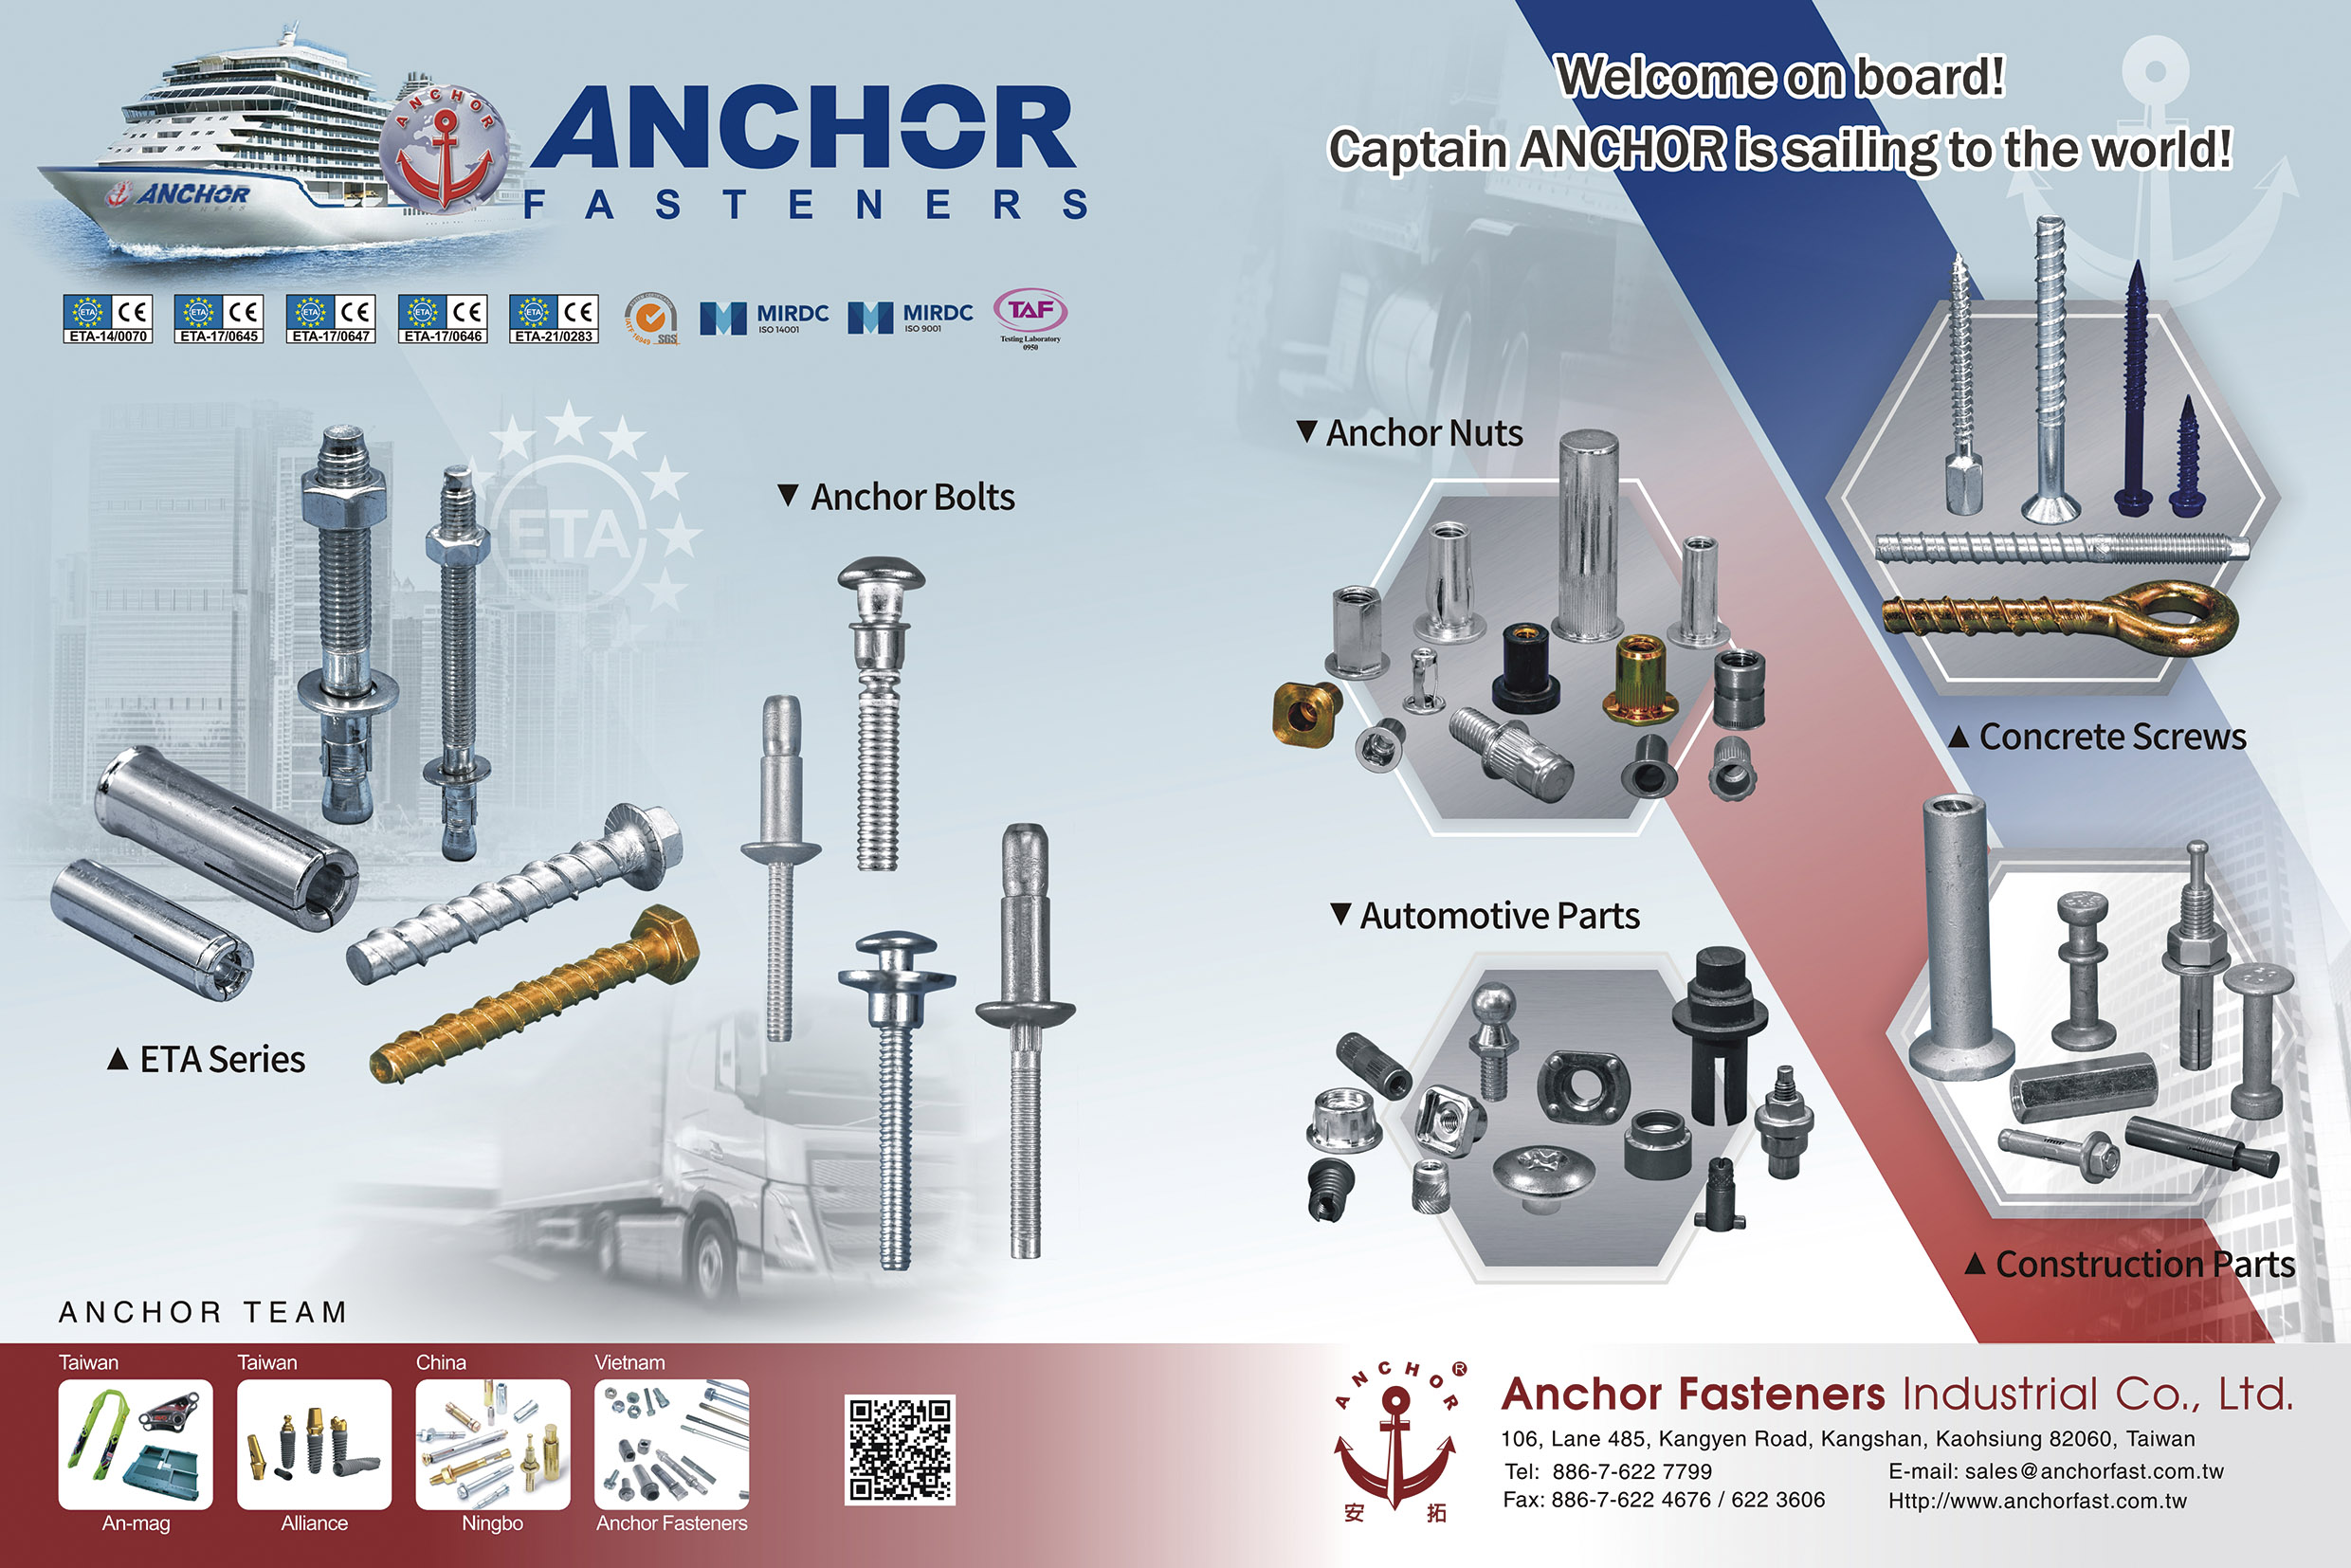 ANCHOR FASTENERS INDUSTRIAL CO., LTD.  , ETA Series, Anchor Bolts, Anchor Nuts, Automotive Parts, Concrete Screws, Construction Parts... , Anchors